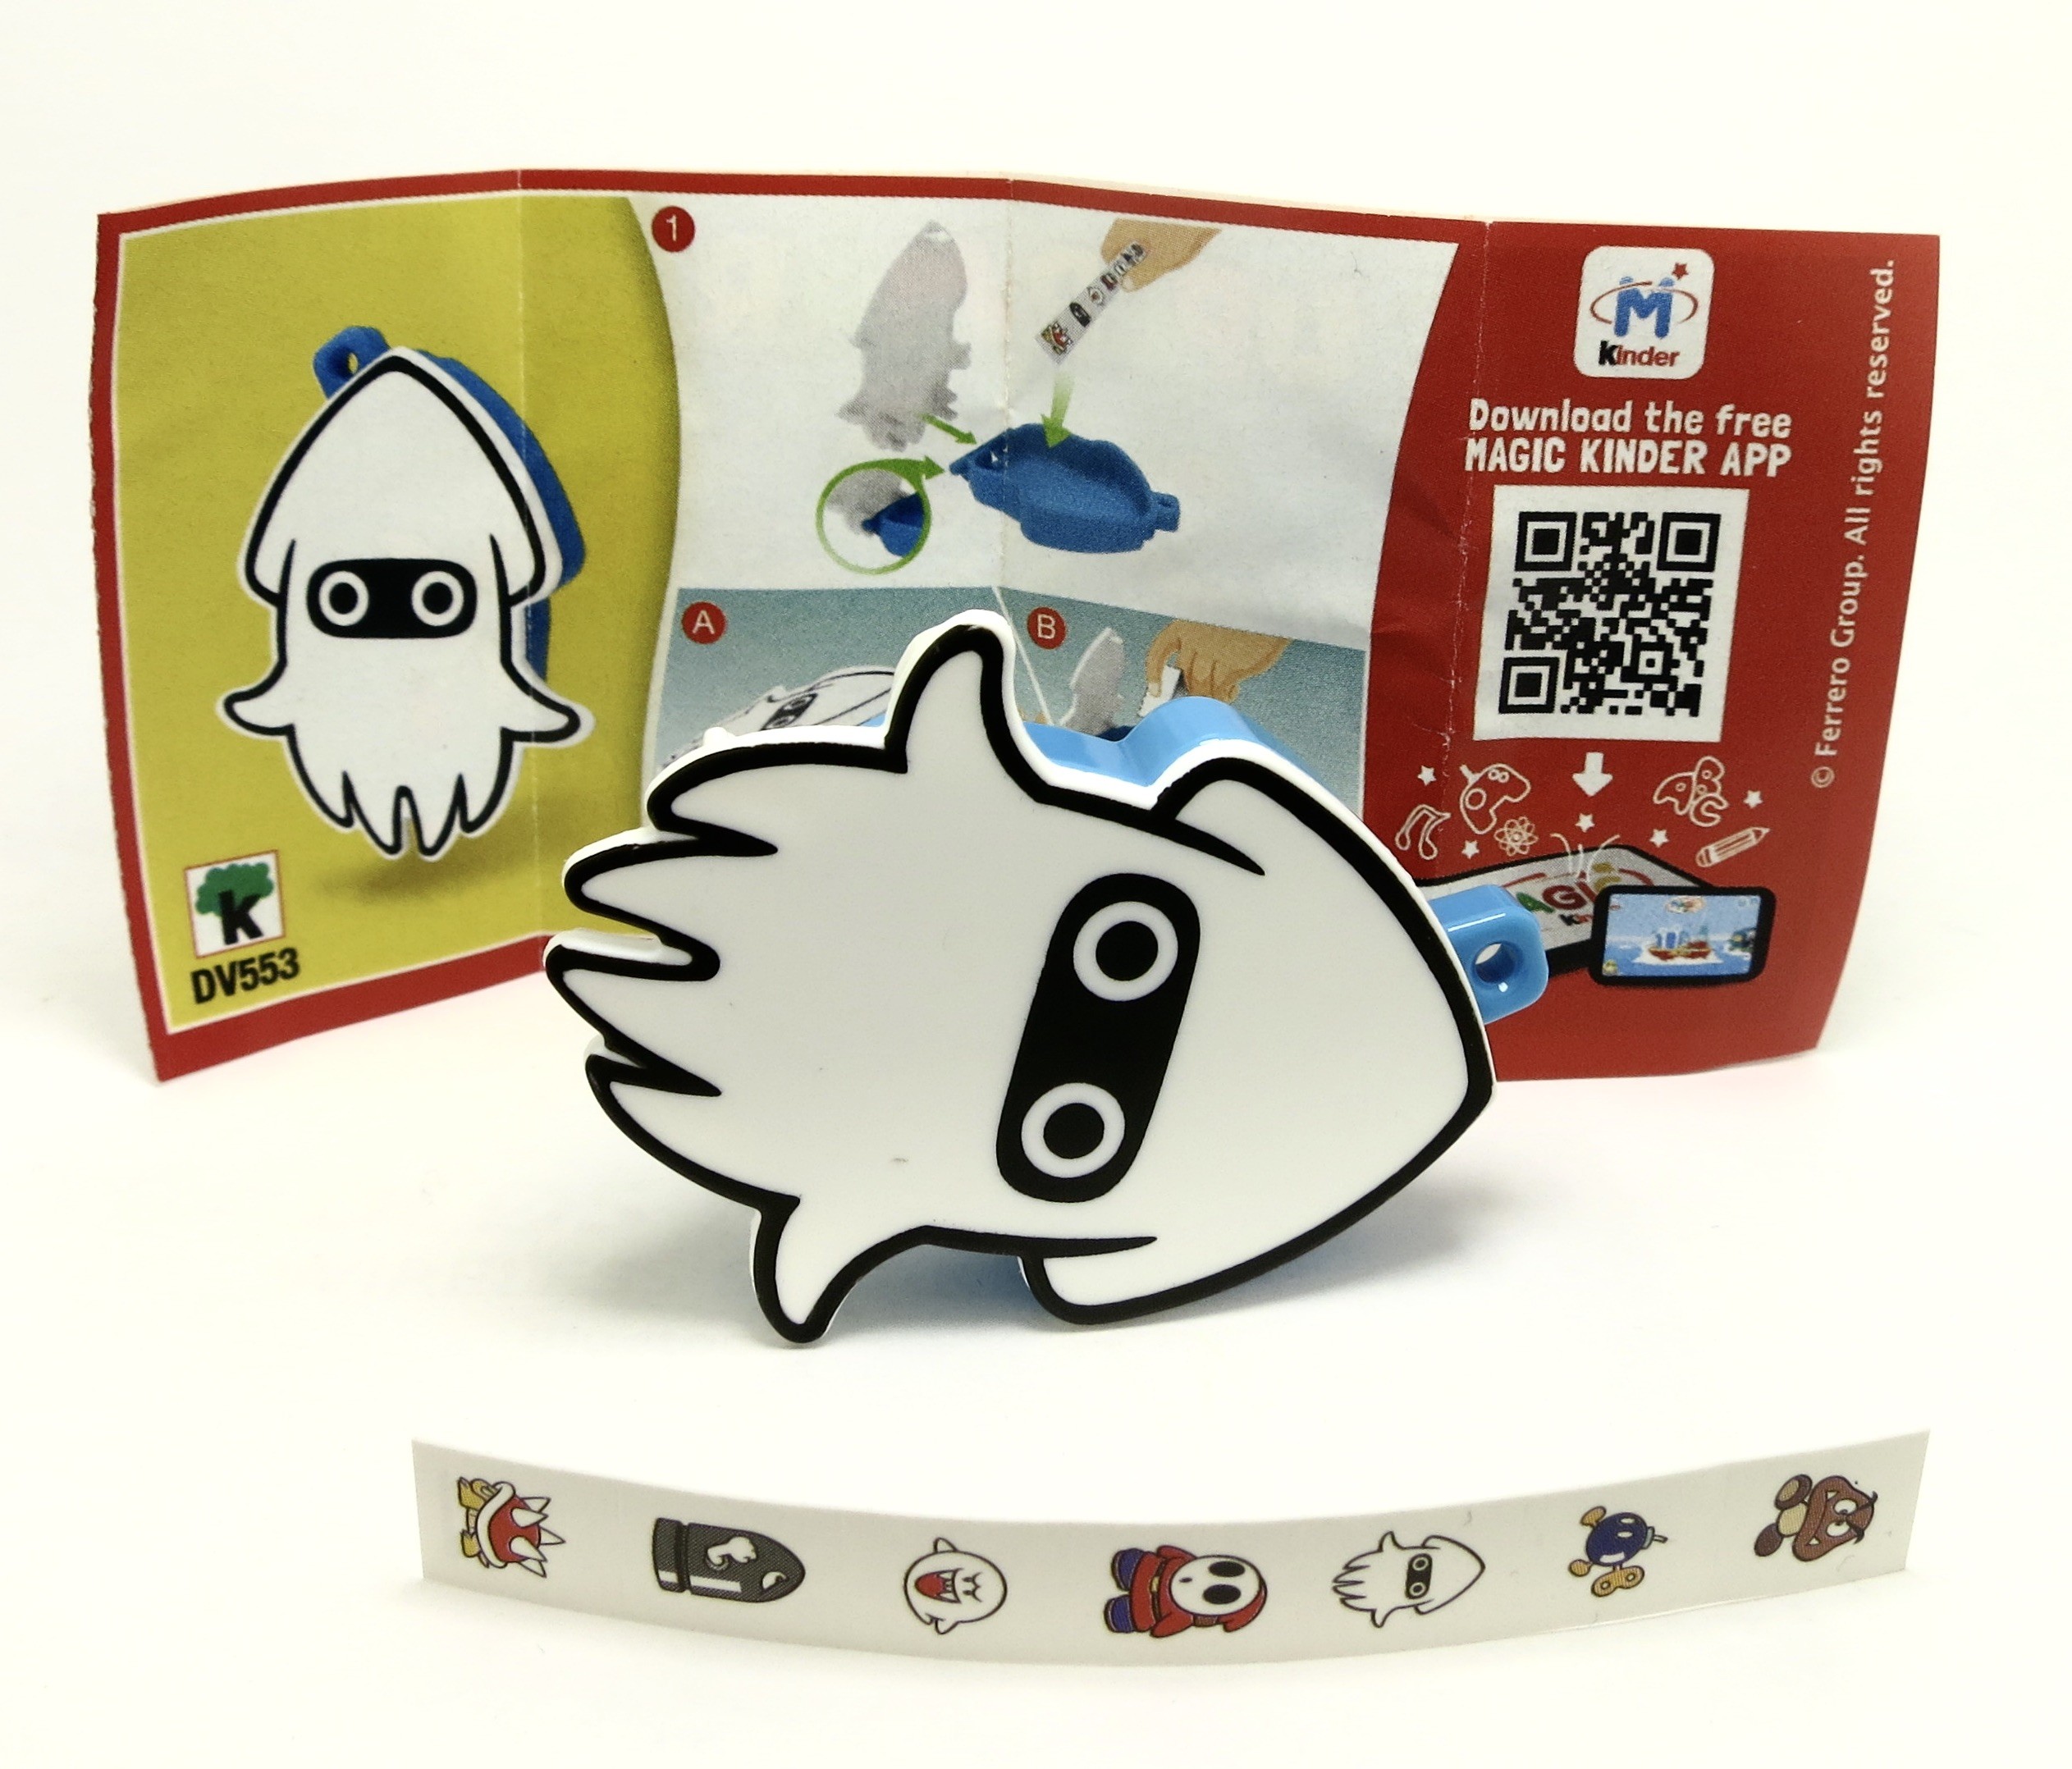 DV553 Sticker Box Mit Bpz Ferrero Italien 2020 Kinder Joy Super Mario 